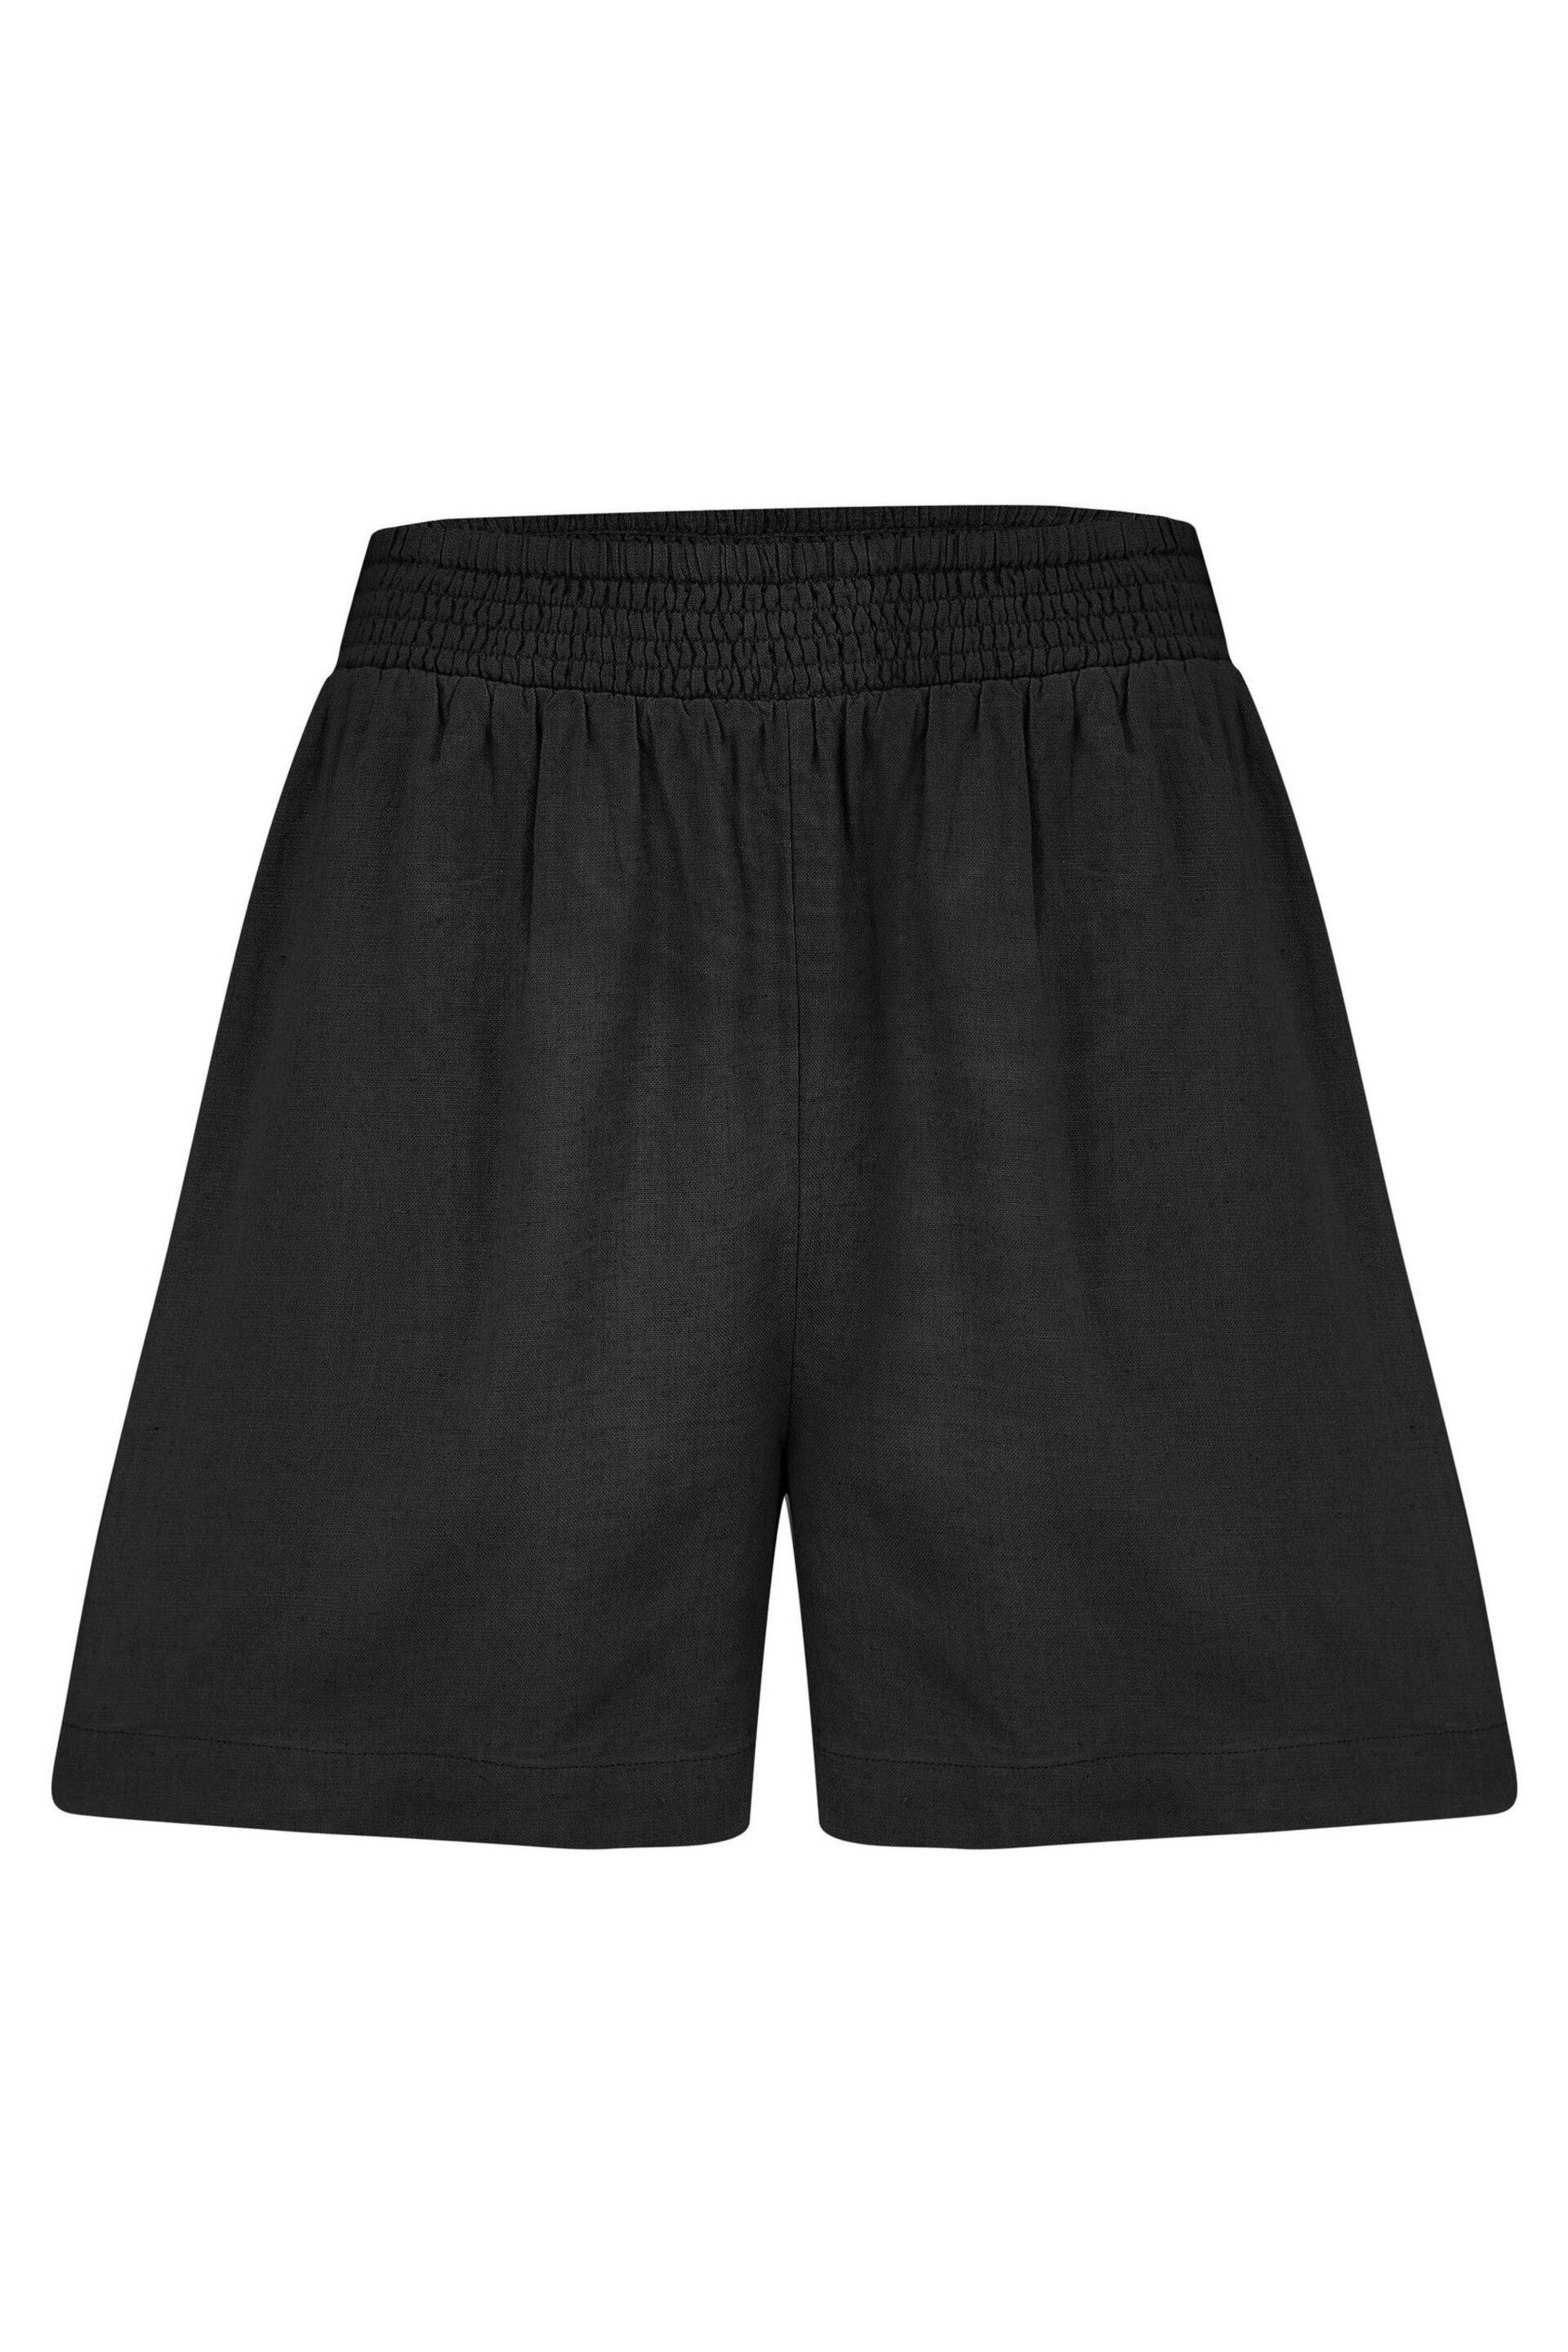 Pour Moi Black Bree High Waist Linen Blend Elasticated Shorts - Image 3 of 4